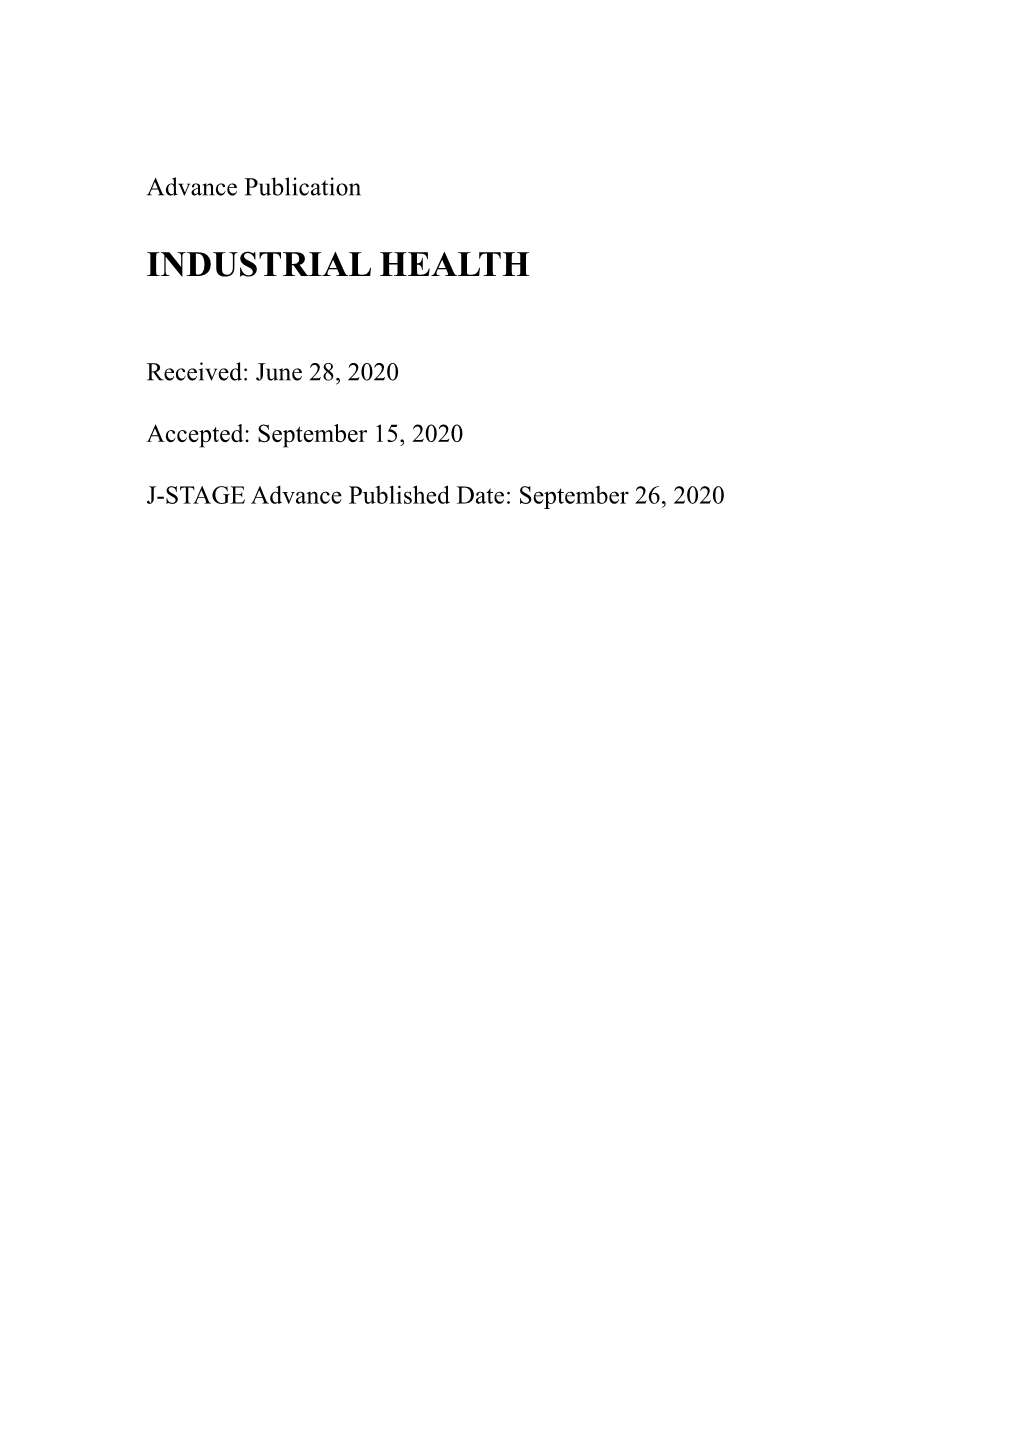 Industrial Health